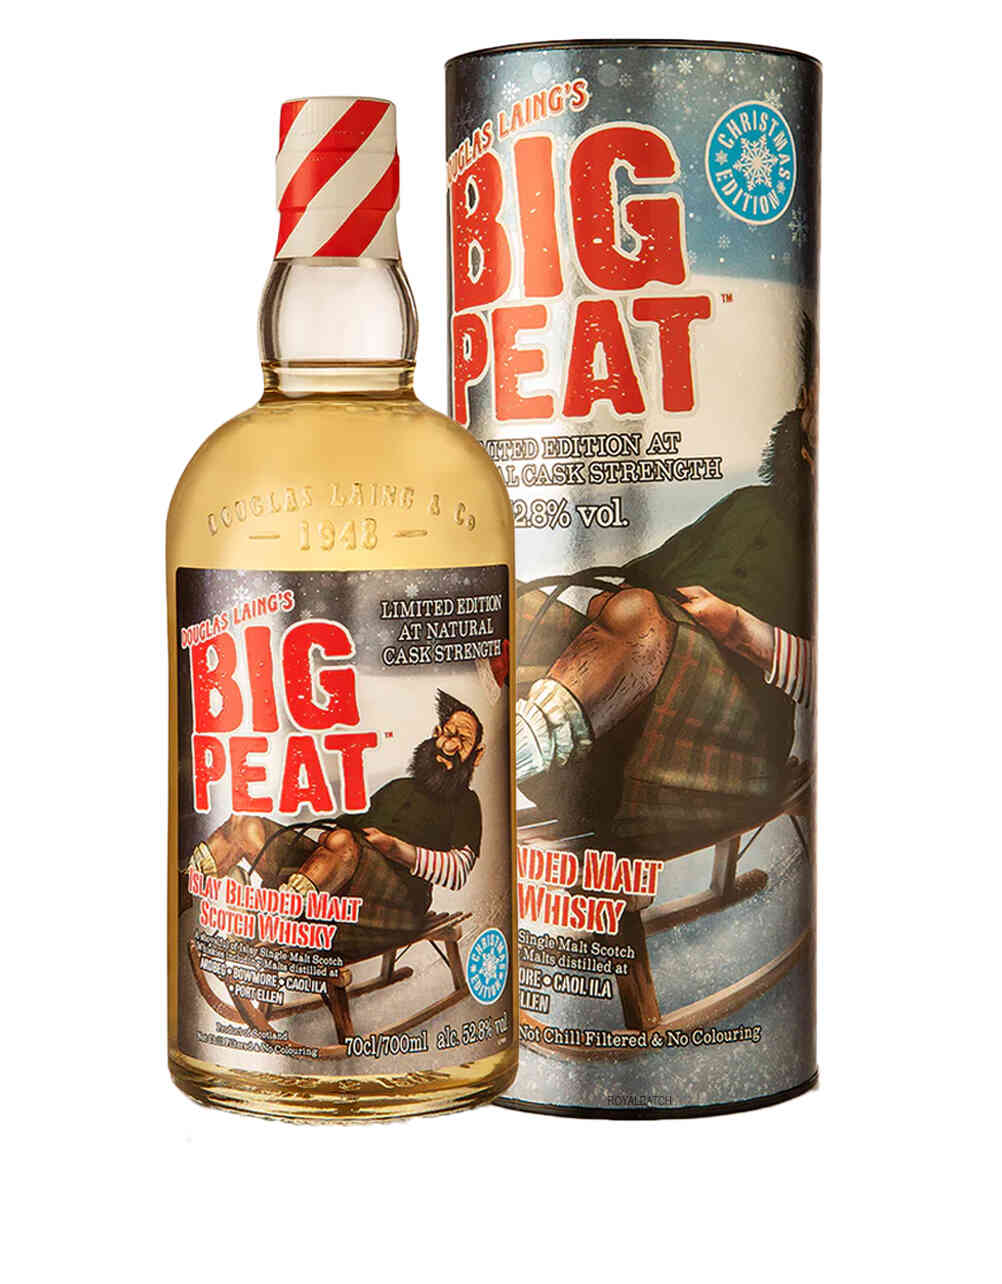 Douglas Laings Big Peat Christmas Blended Malt Scotch Whisky